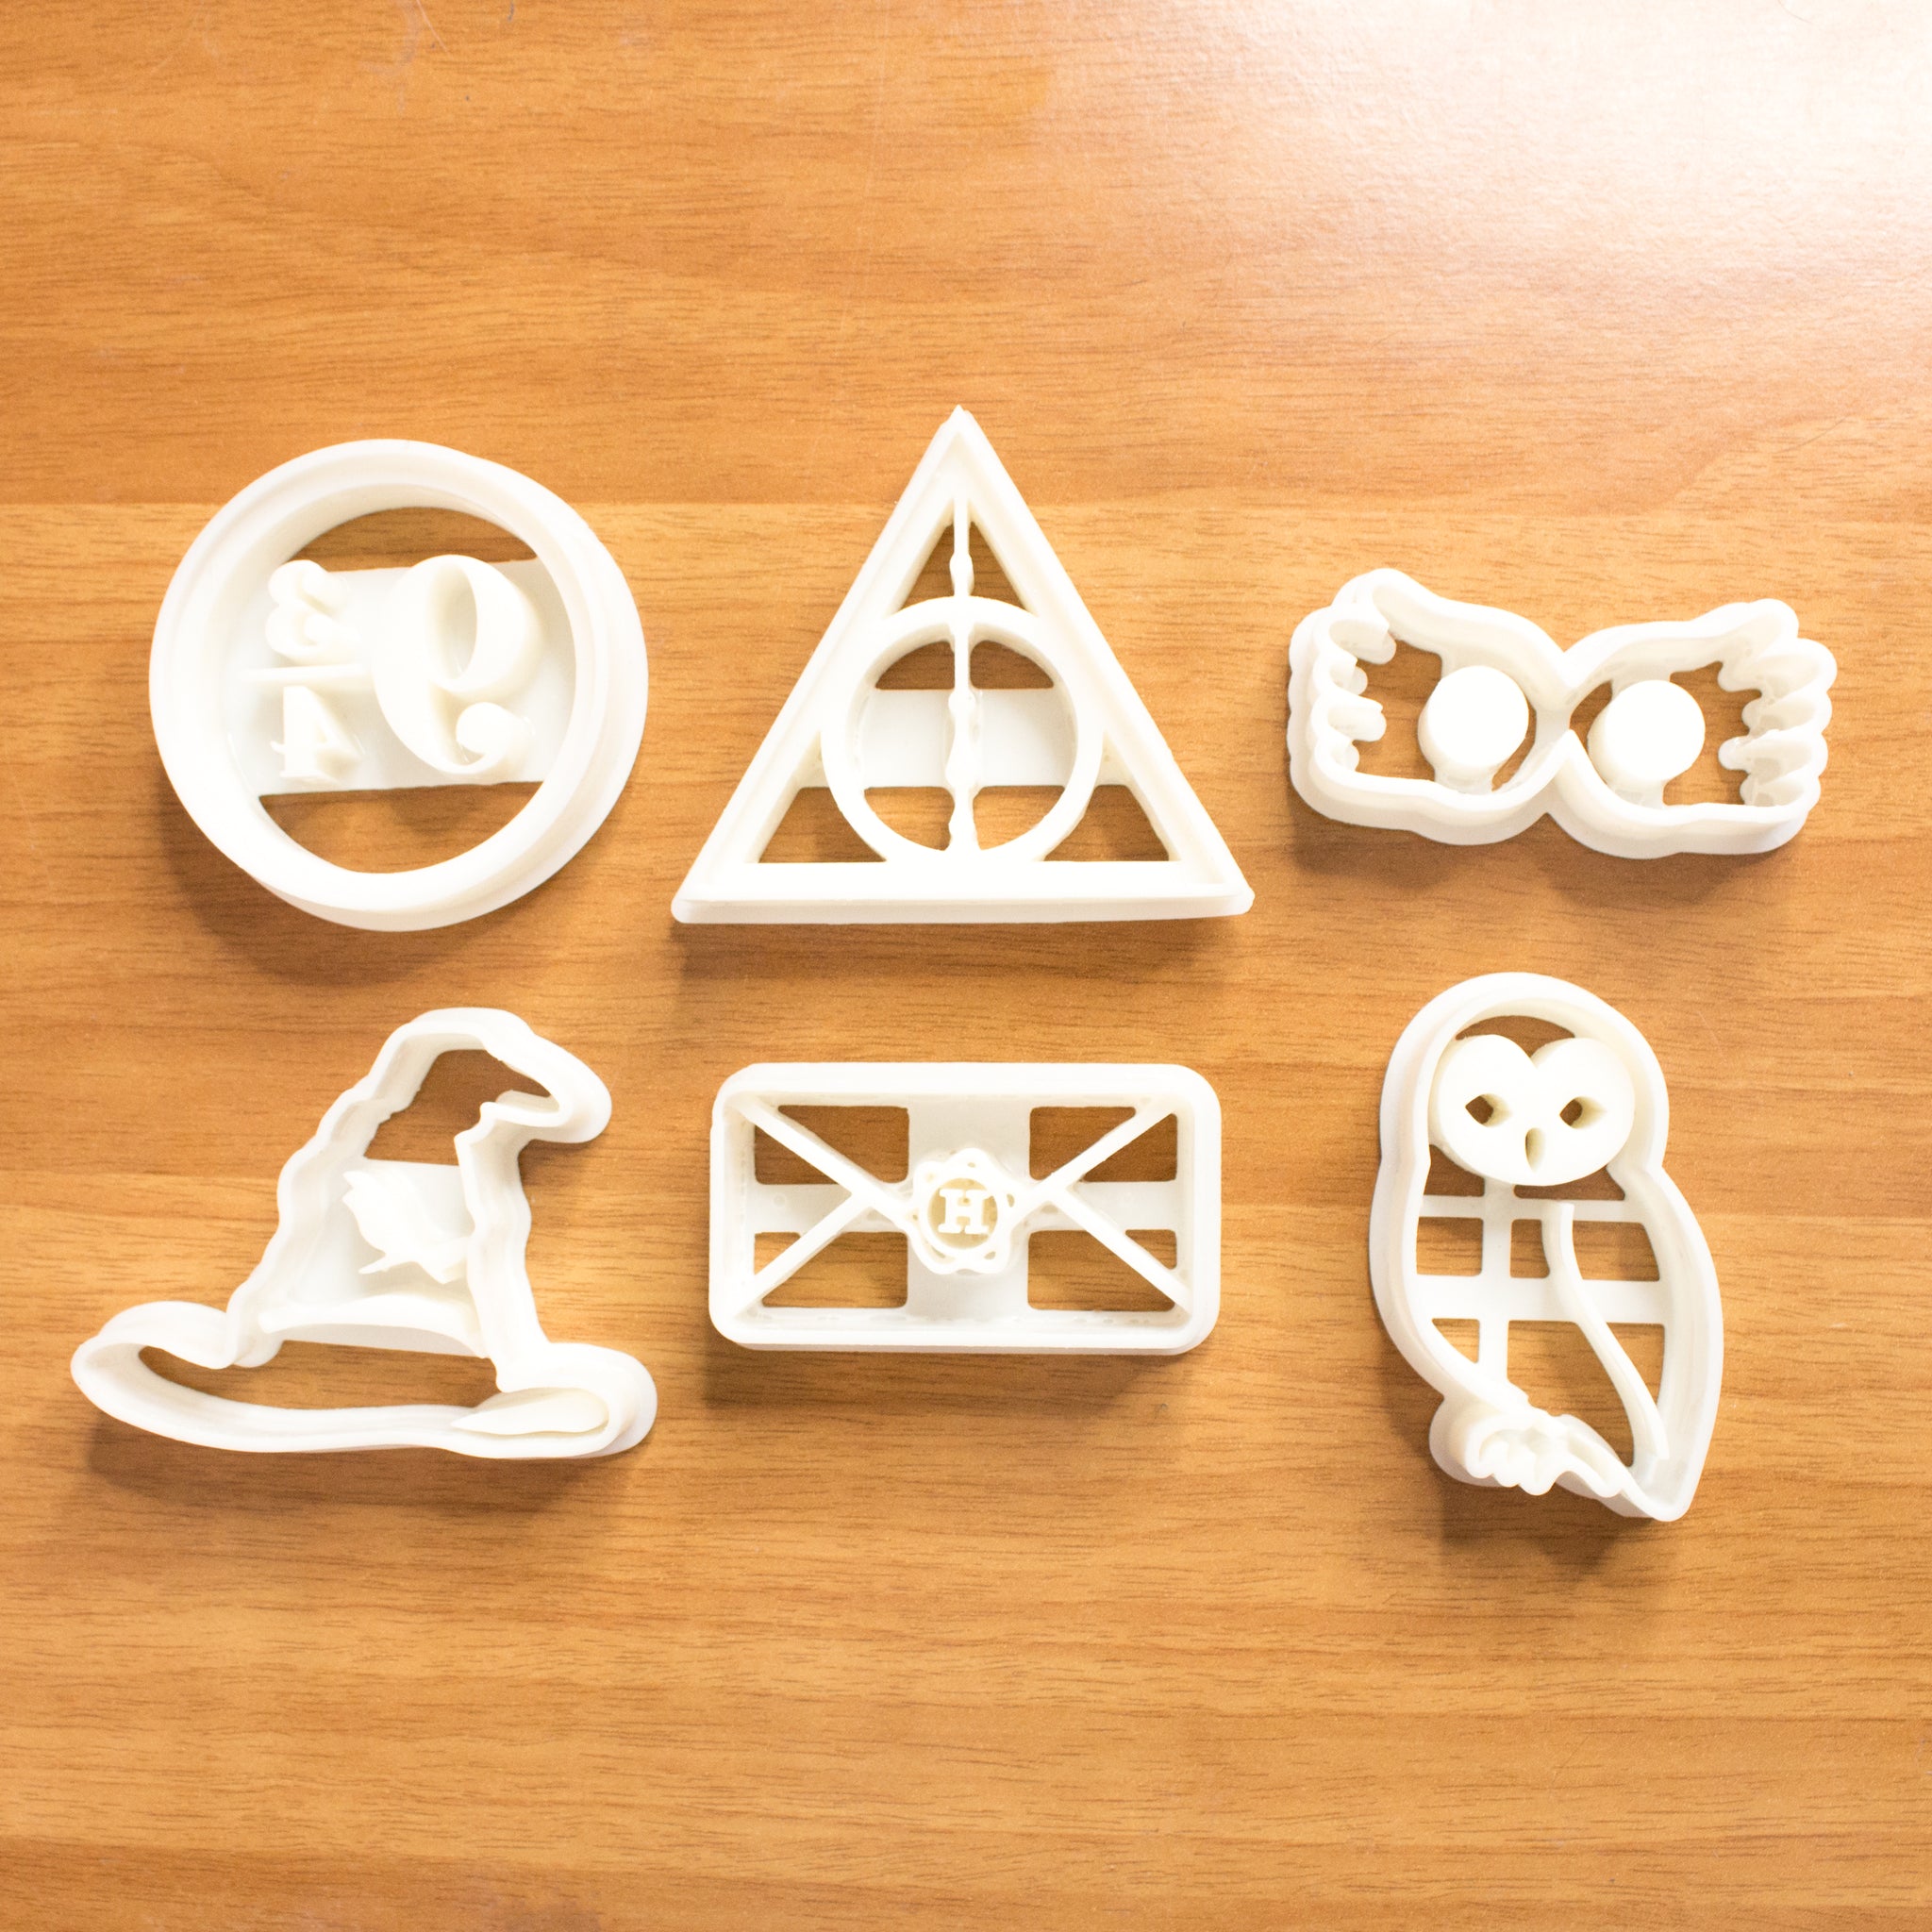 cookie cutter harry potter chibi pack set 3D model 3D printable